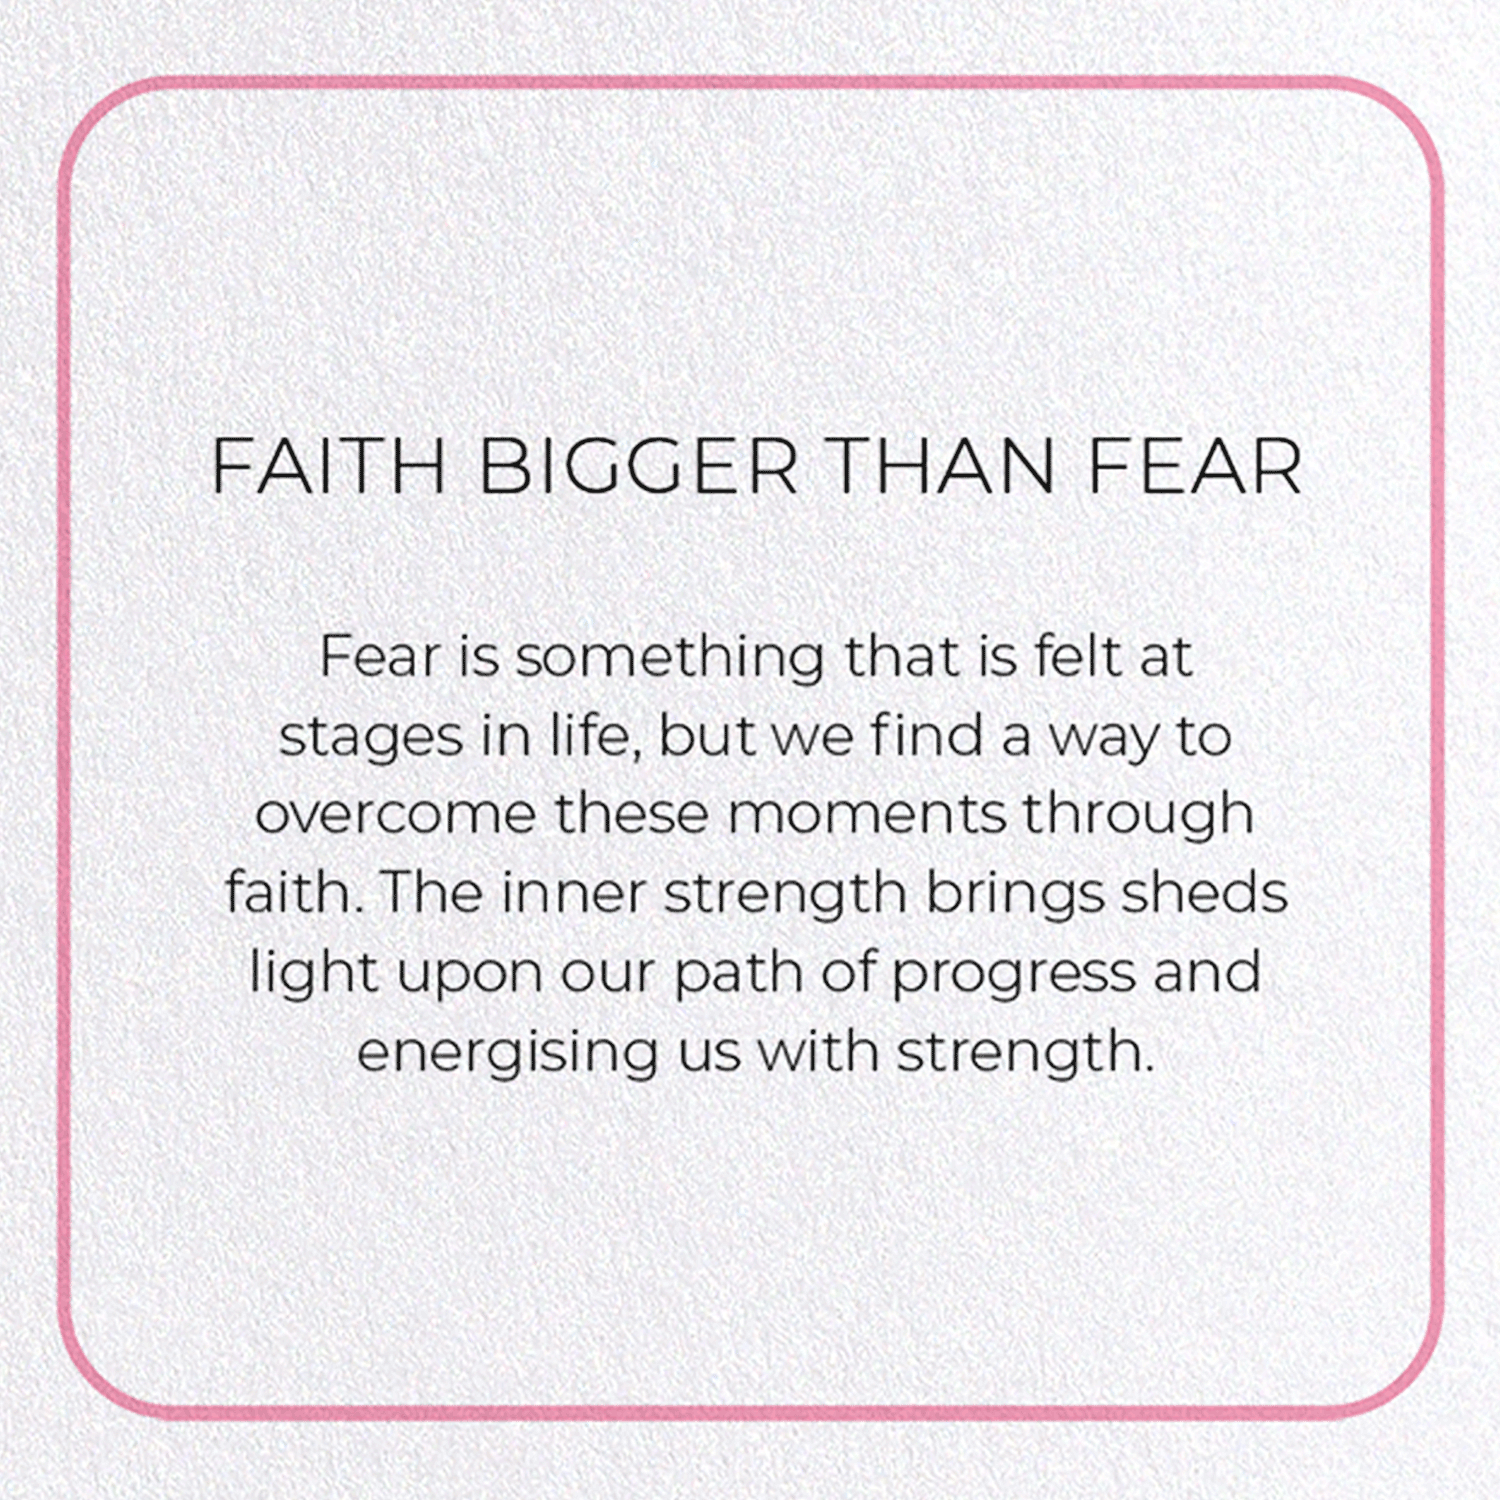 FAITH BIGGER THAN FEAR